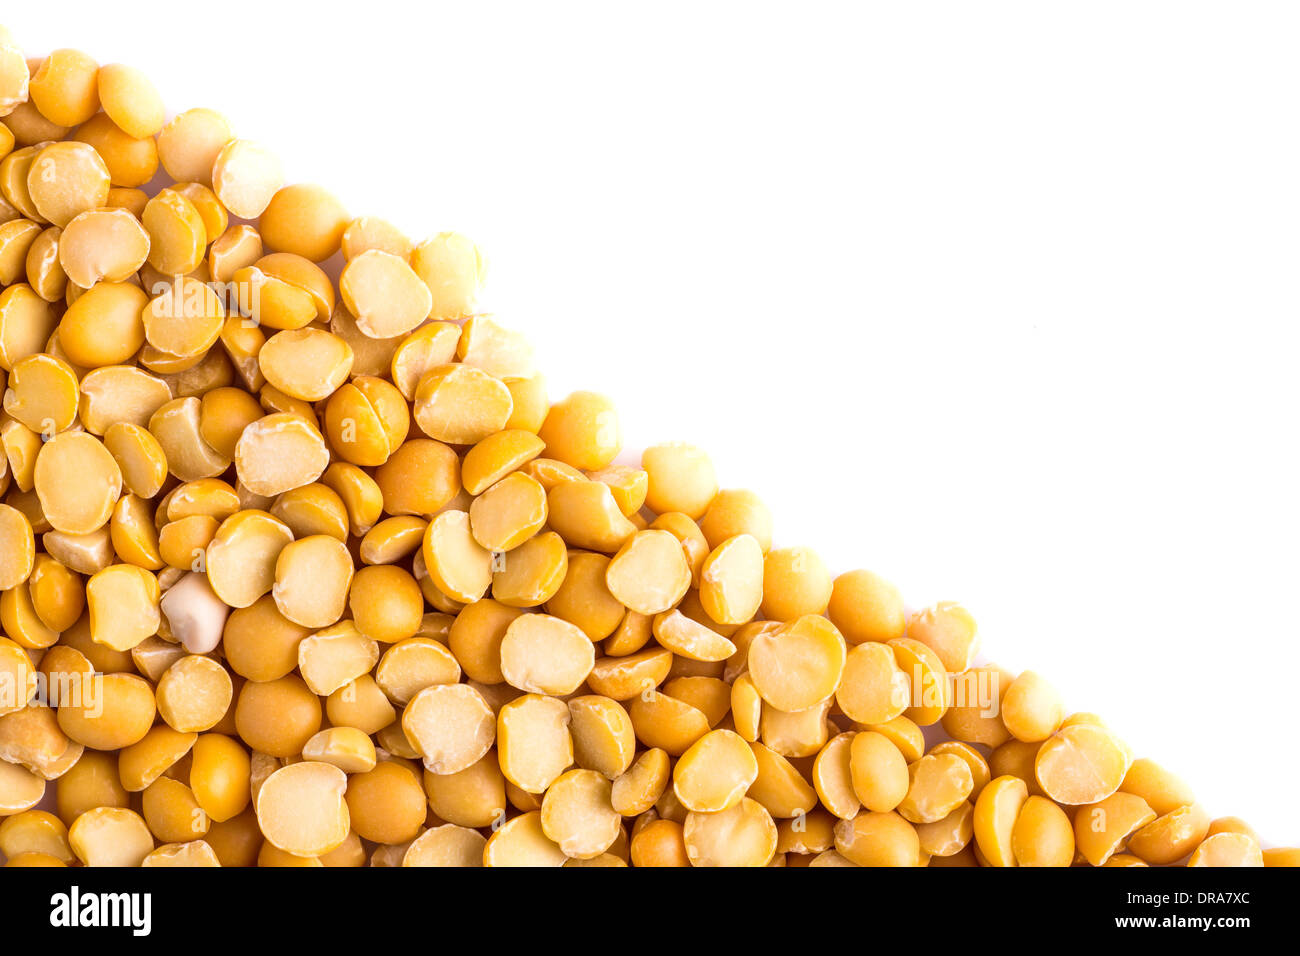 Shredded peas on white background, diagonal split Stock Photo